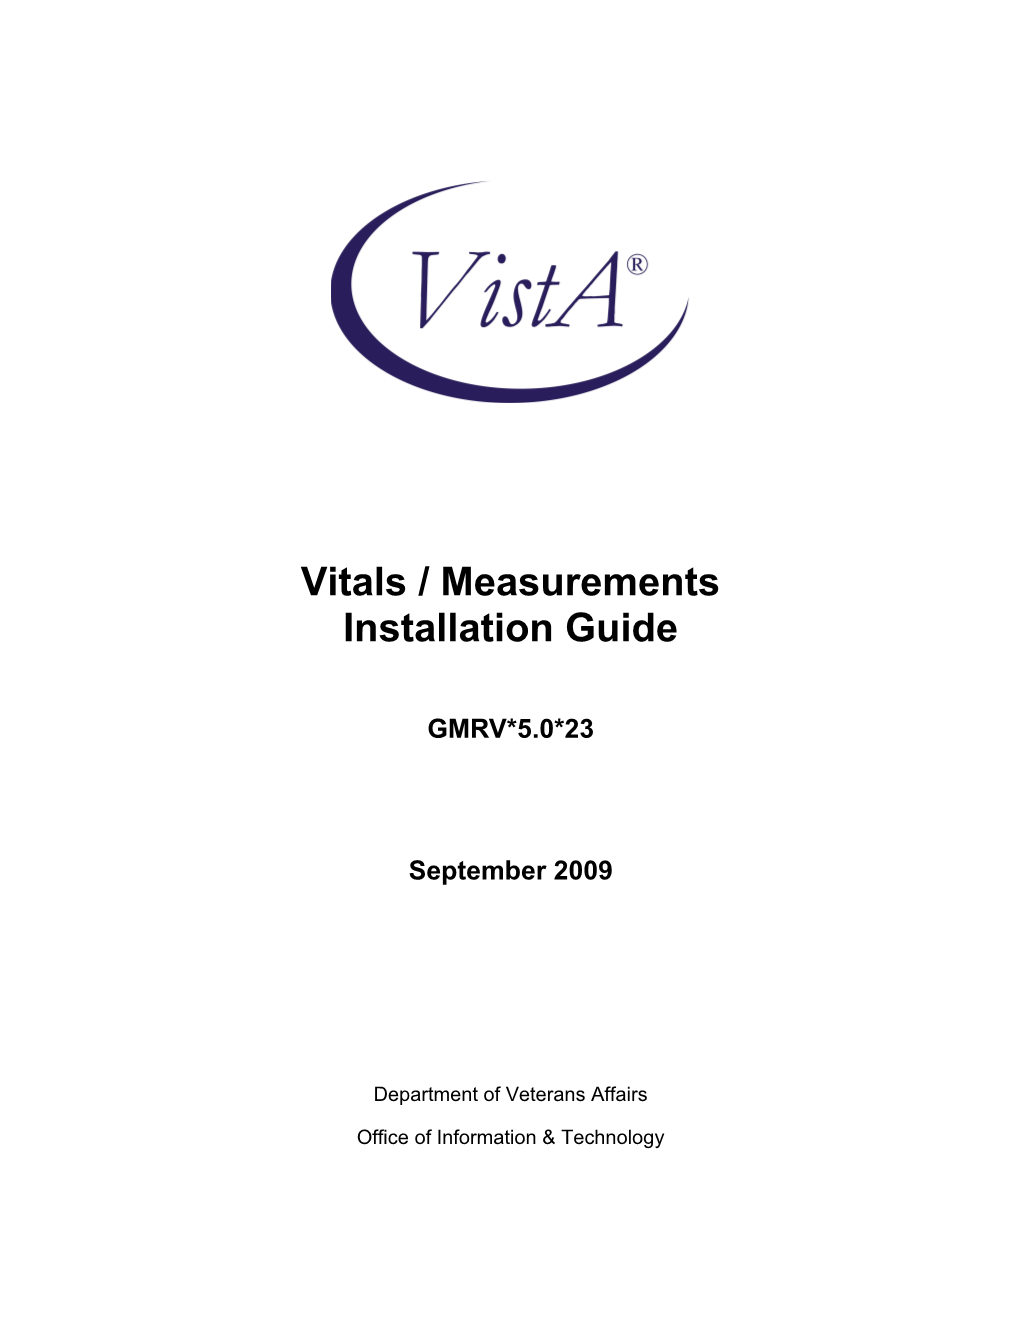 Vitals / Measurements Installation Guide